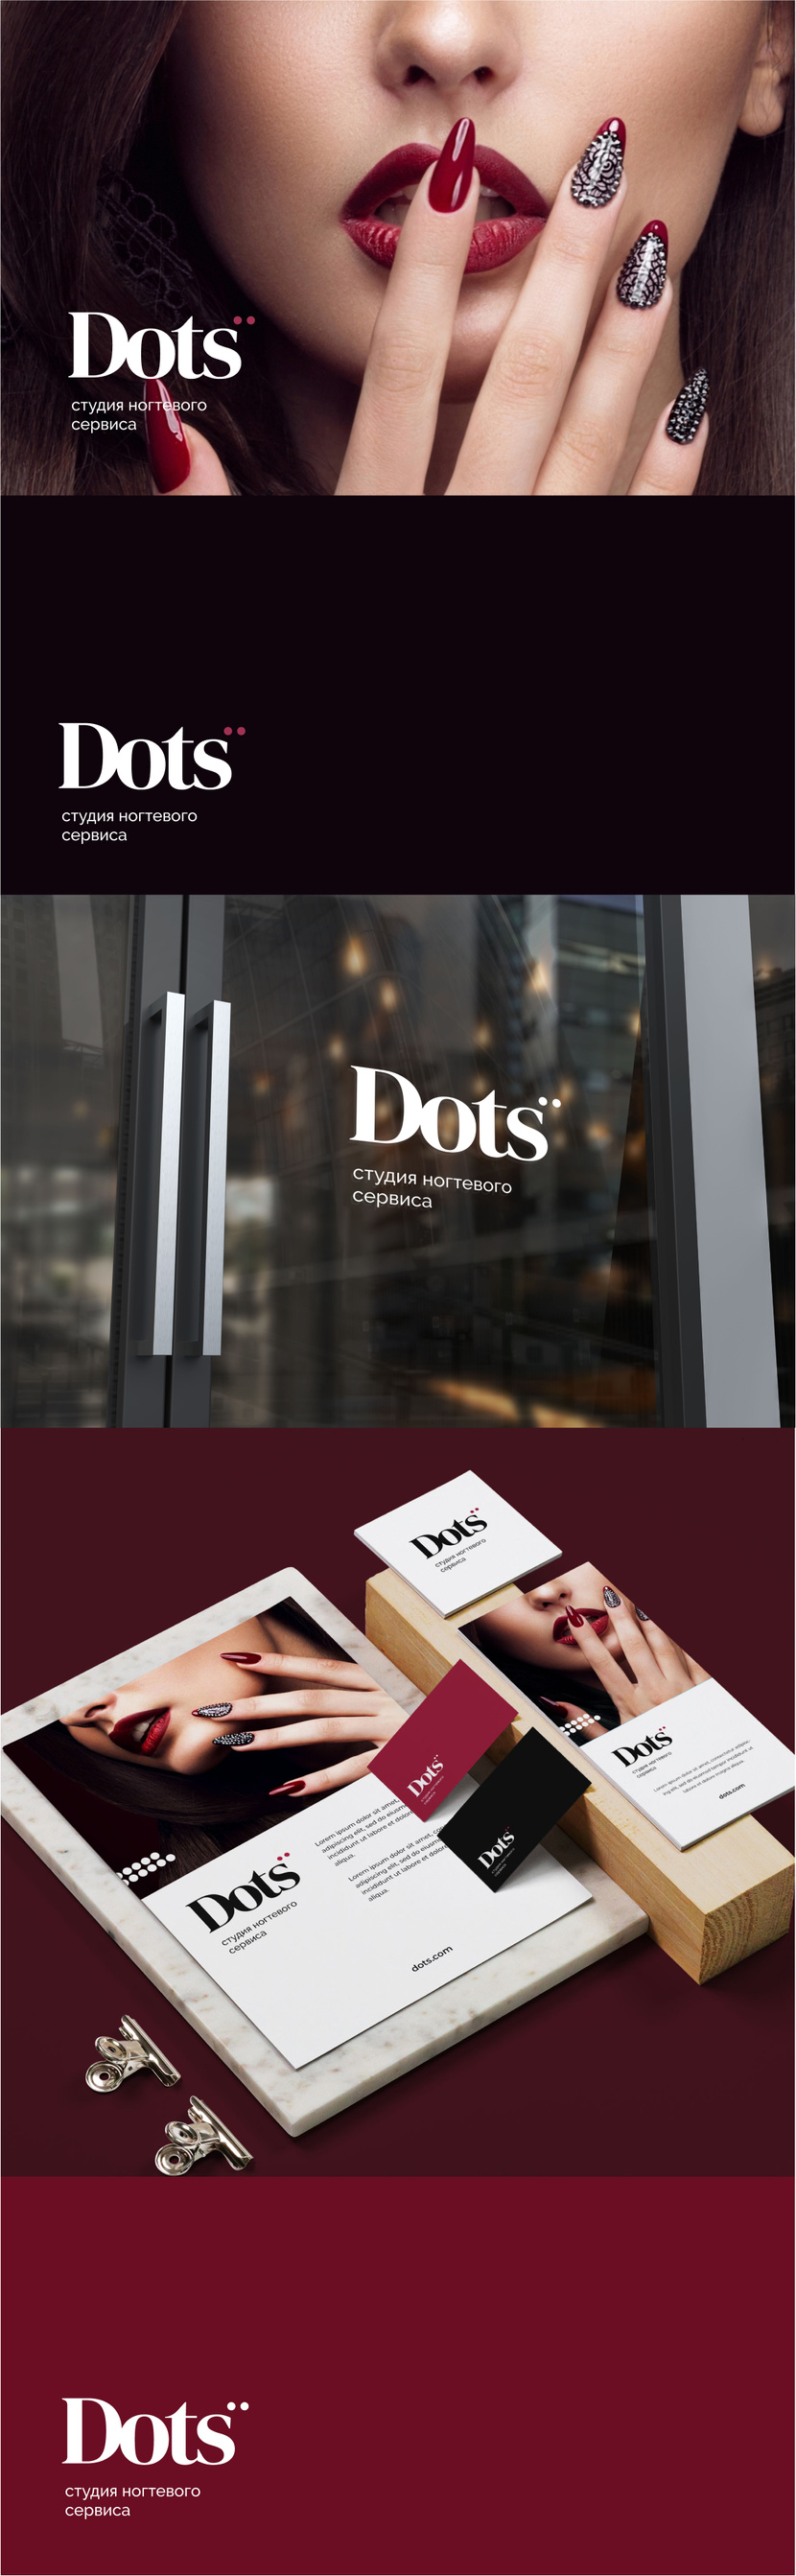 Dots - Разработка логотипа для студии ногтевого сервиса 'dots'